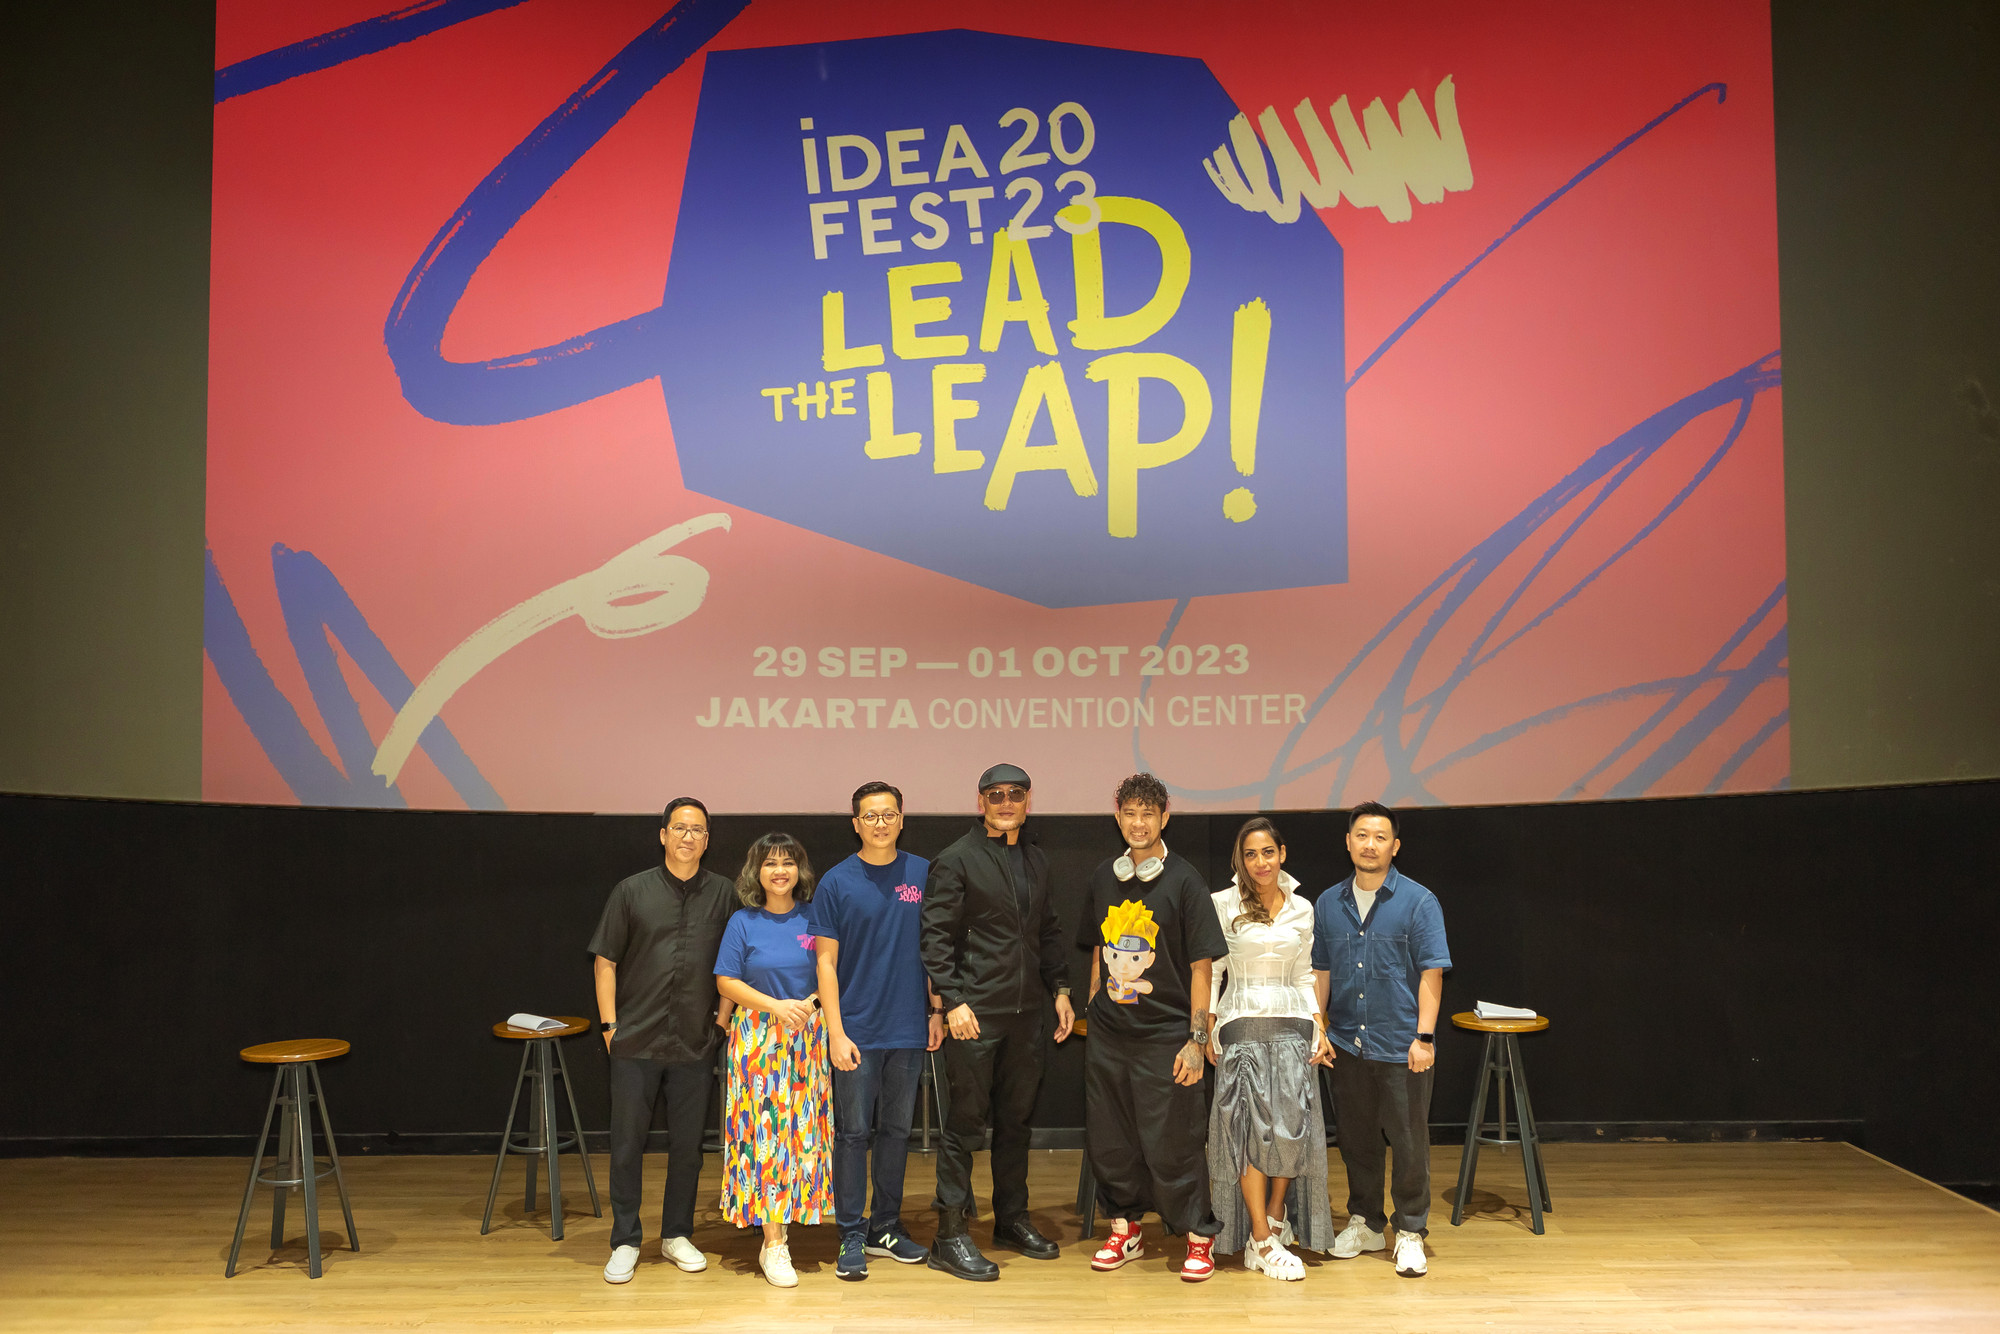 Dukung Pertumbuhan Industri Kreatif, Ideafest 2023 Bawa Tema “Lead The Leap!”